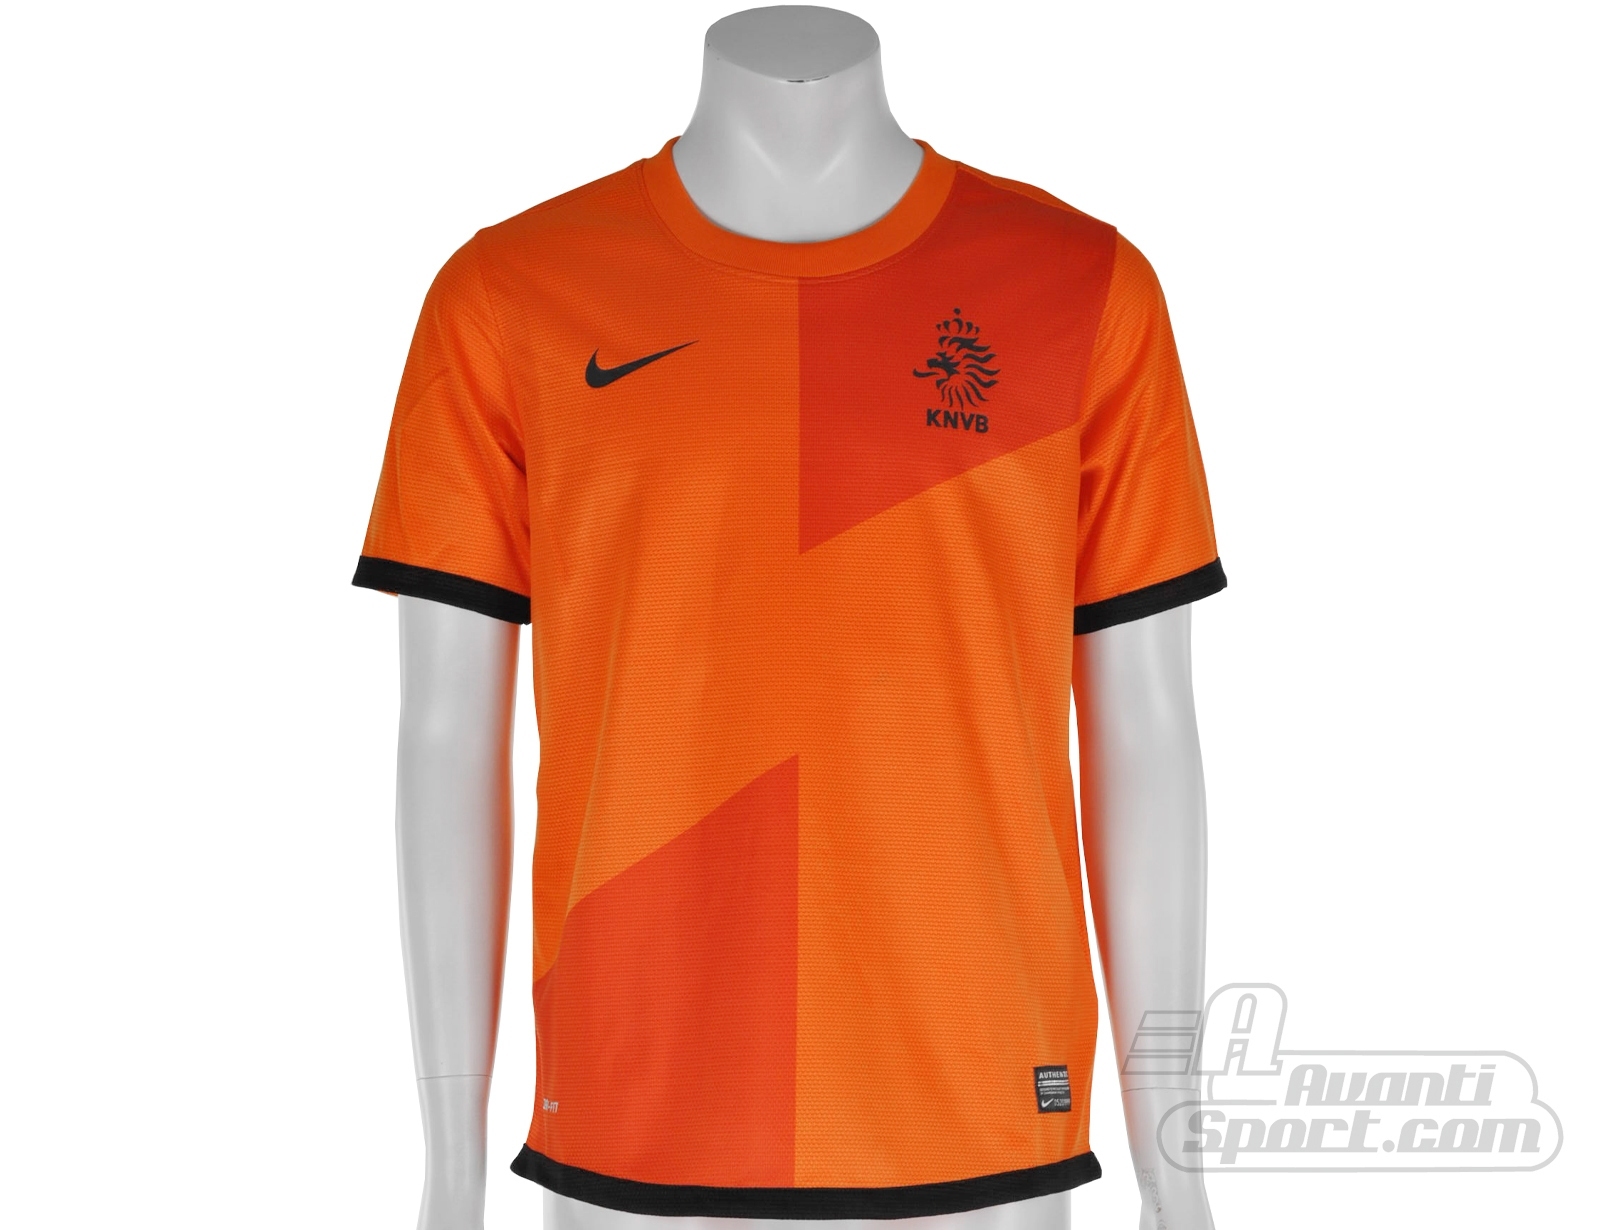 Avantisport - Nike - Dutch Boys Short Sleeve Home Replica Jersey - Nederlands Elftal Shirts